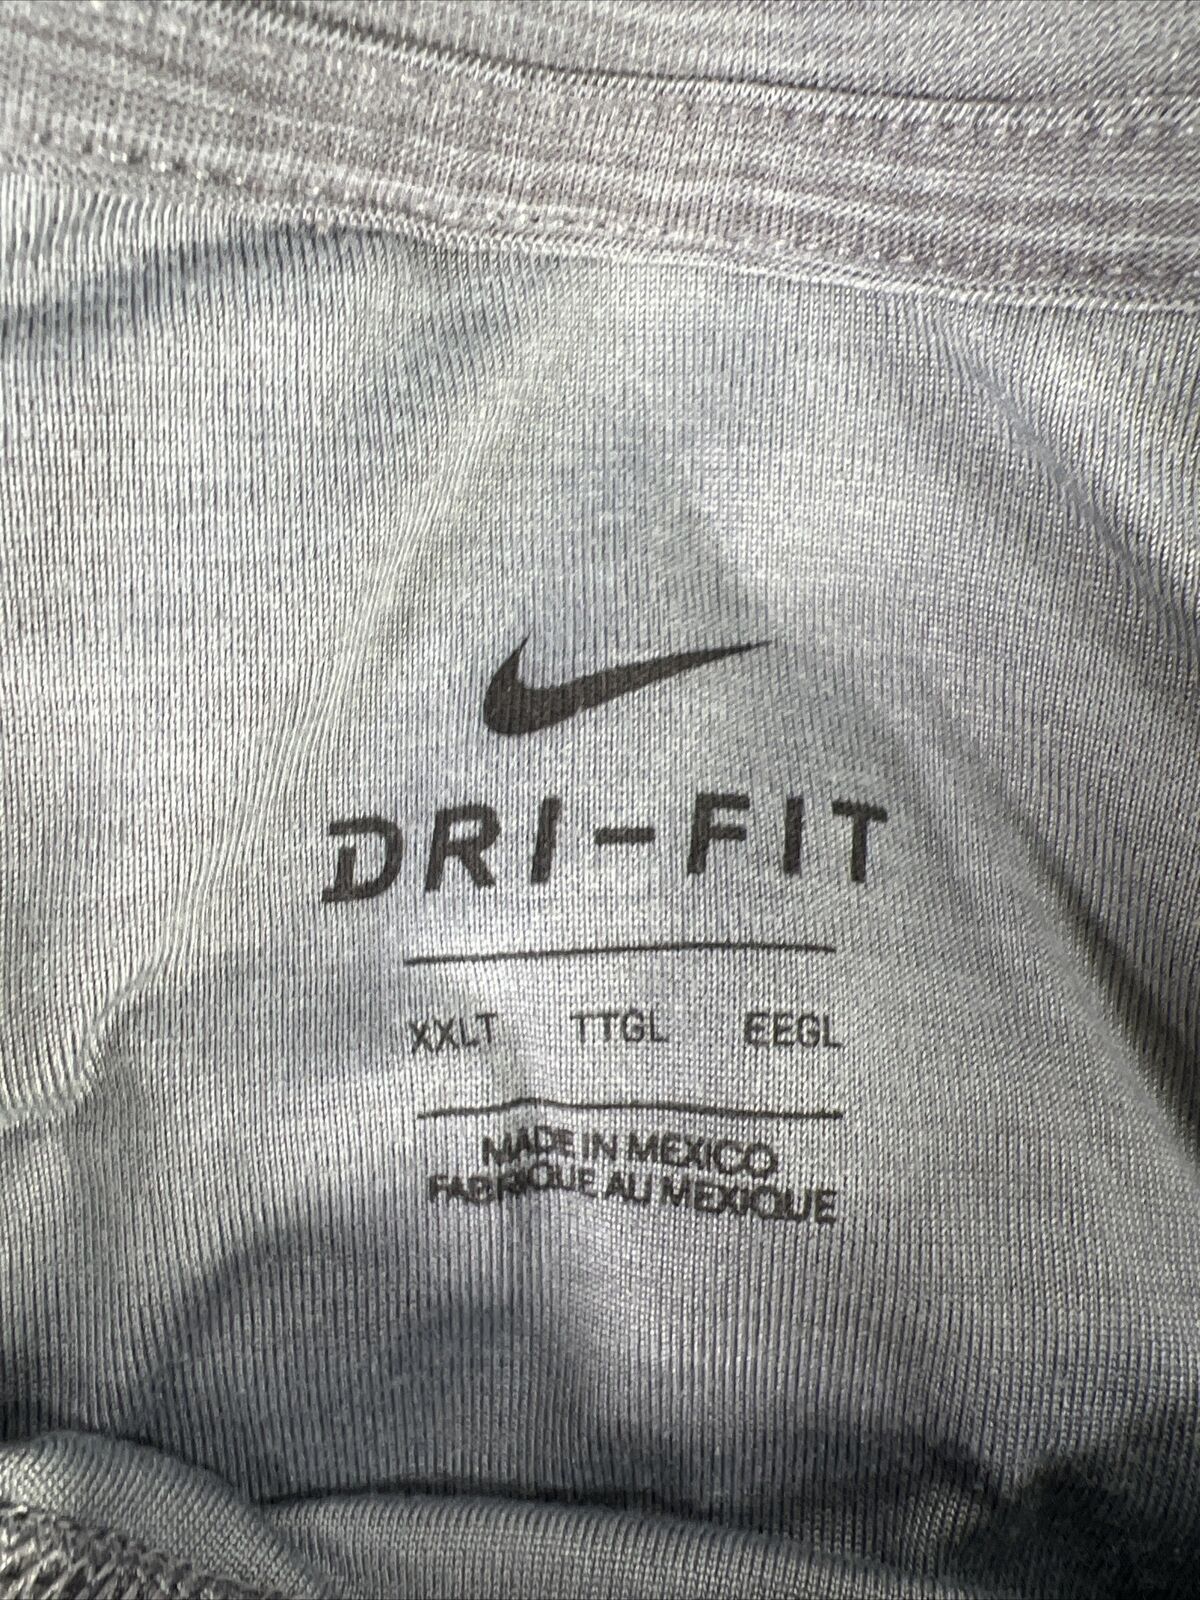 Camiseta deportiva de manga corta Nike Dri-Fit Breathe gris para hombre - XXL